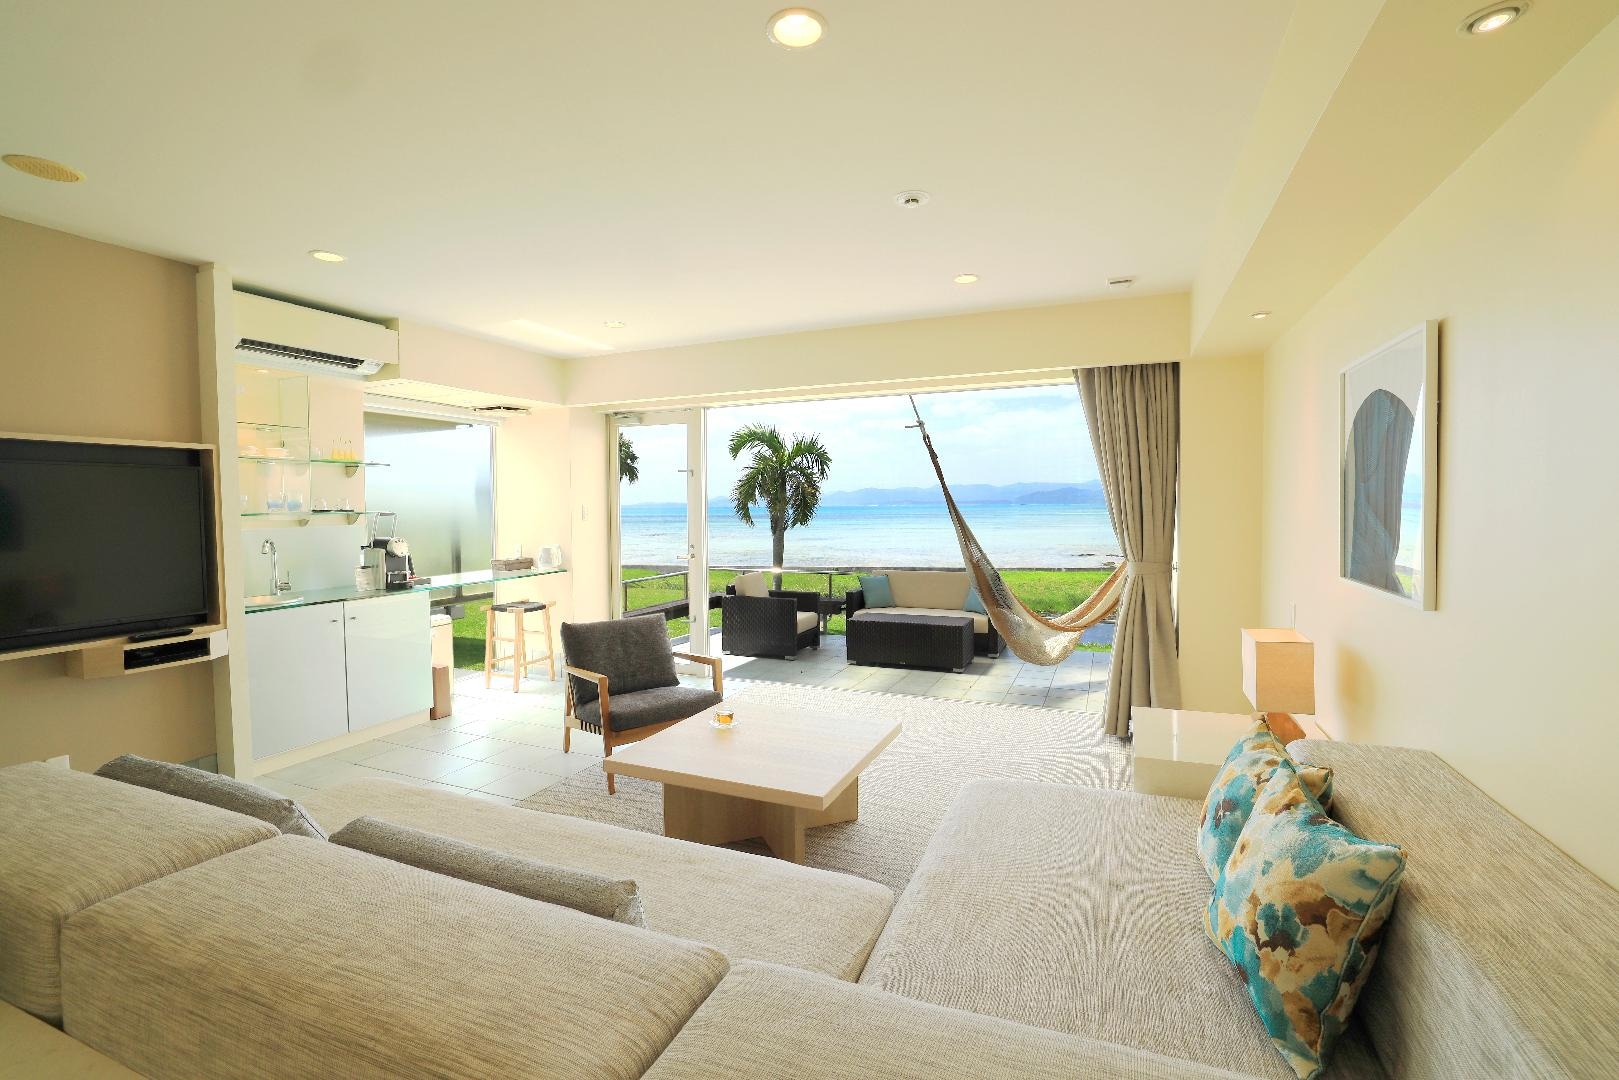 Ocean view suite